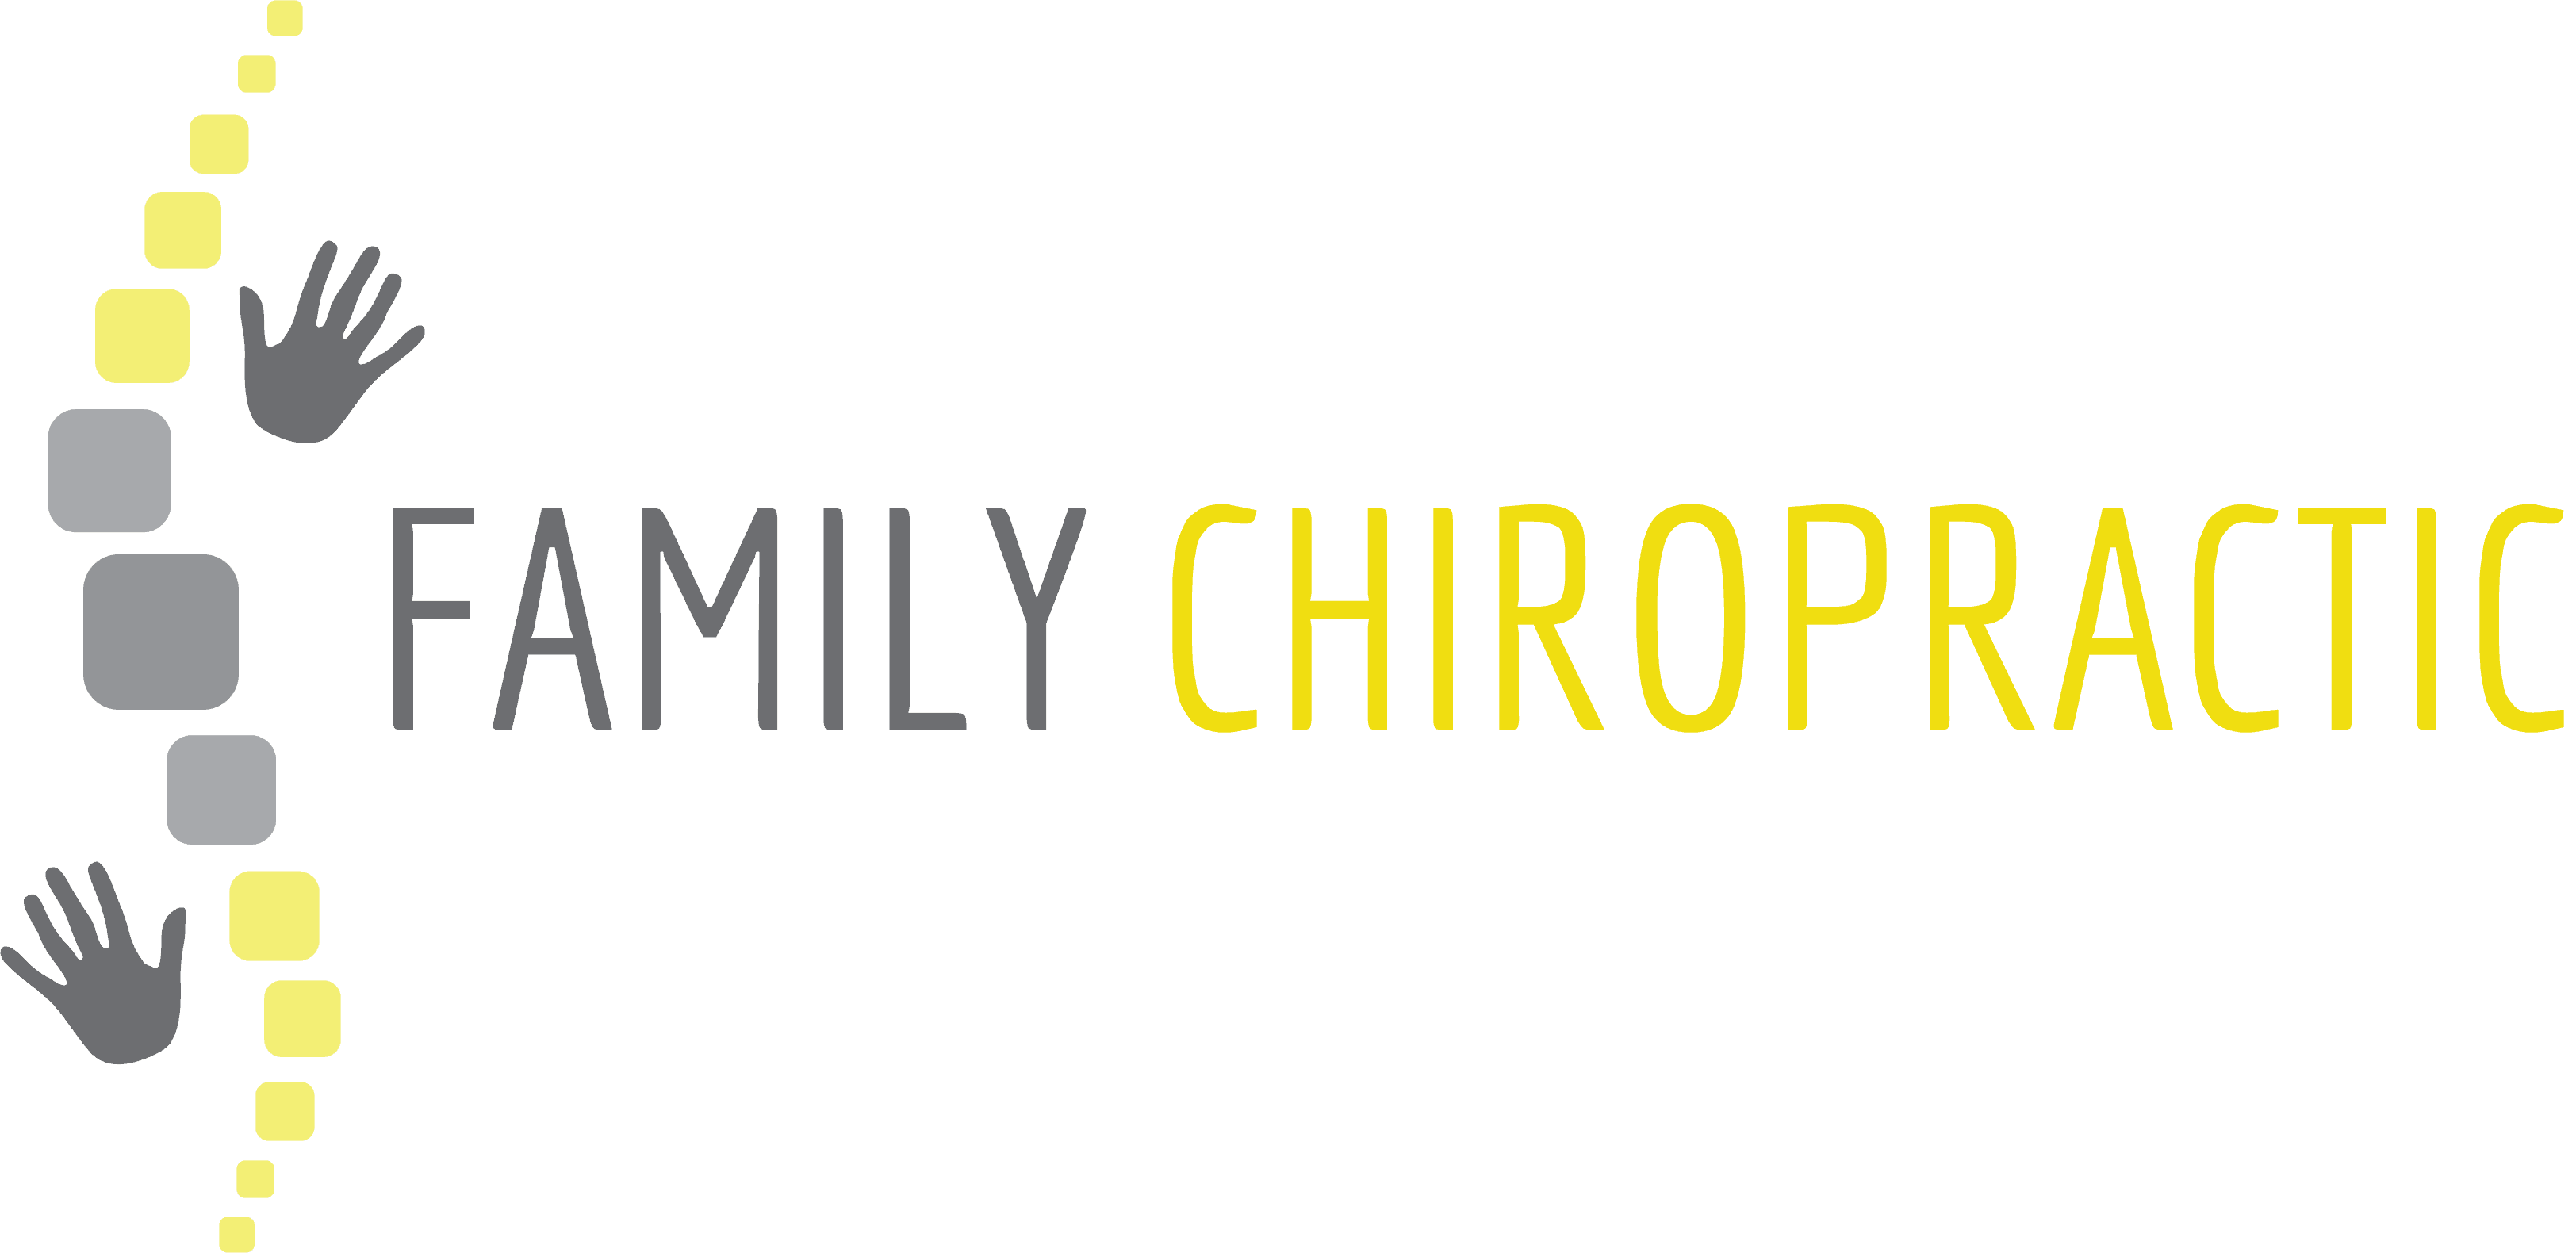 Family Chiropractic Logo